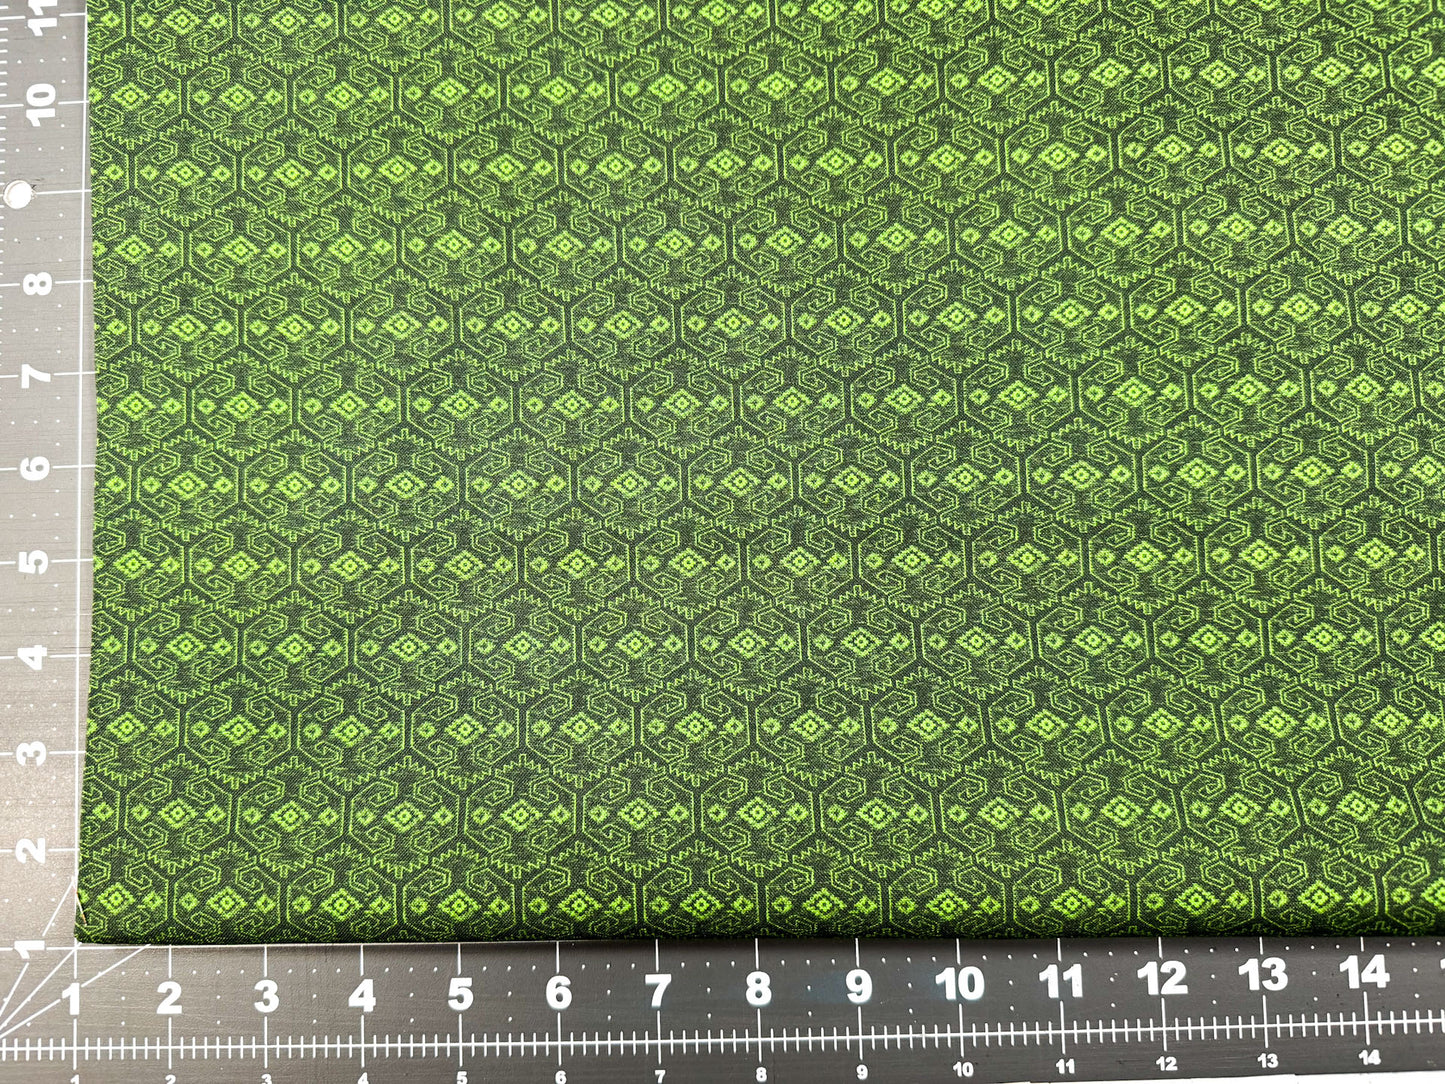 Santa Fe Aztec green blender fabric